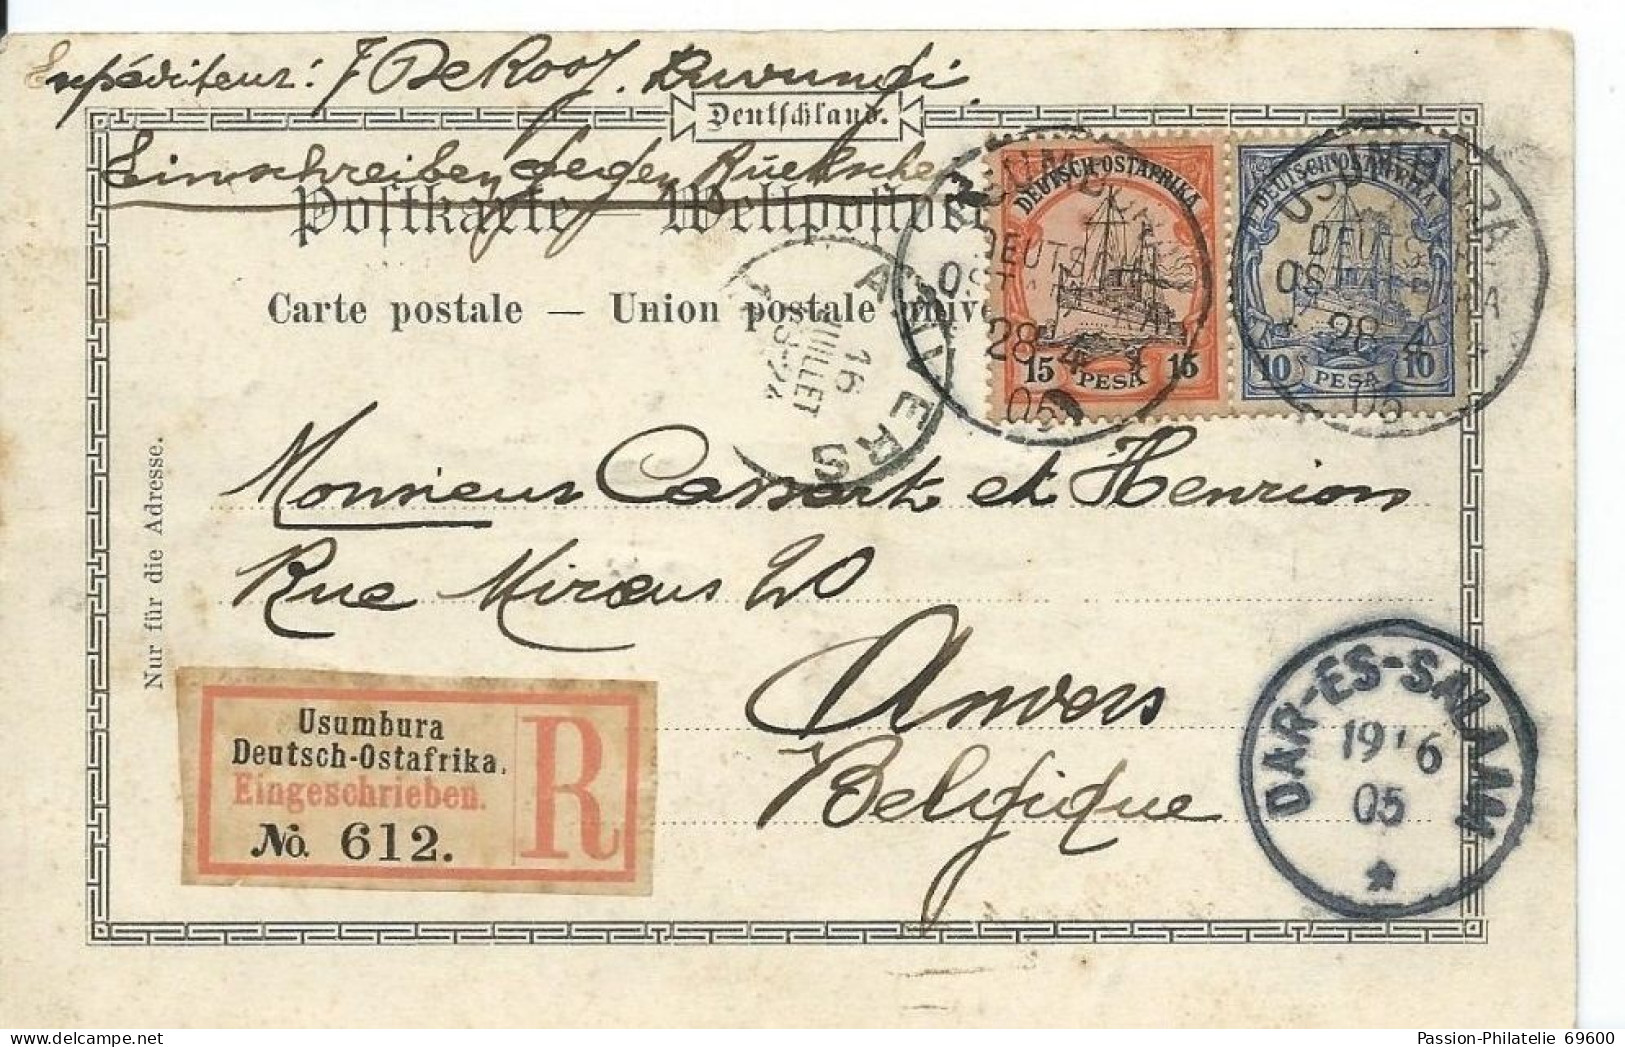 Militar Station Tabora Neue Boma - Circulé 1905 + Timbre Deutsch Ostafrika + Recommandé / Stamp Usumbura - Tanzanie